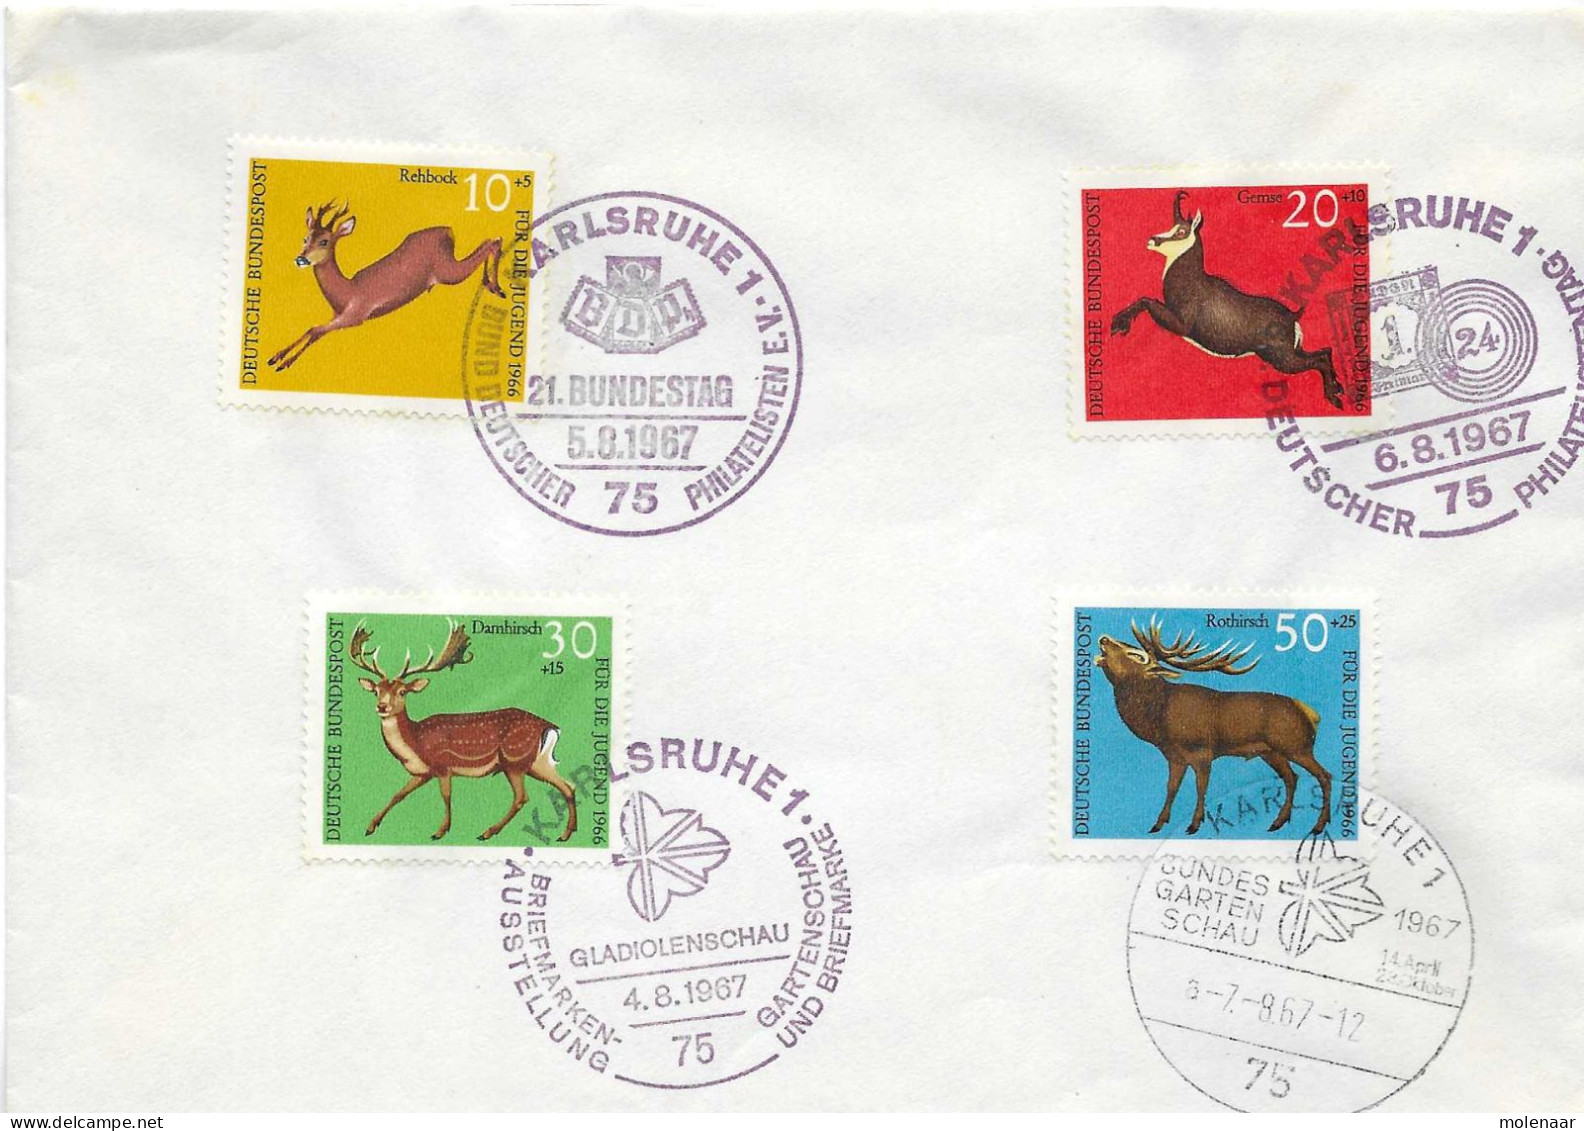 Postzegels > Europa > Duitsland > West-Duitsland > 1960-1969 > Brief Met 511-514 4 Verschillende Stempels (17300) - Storia Postale